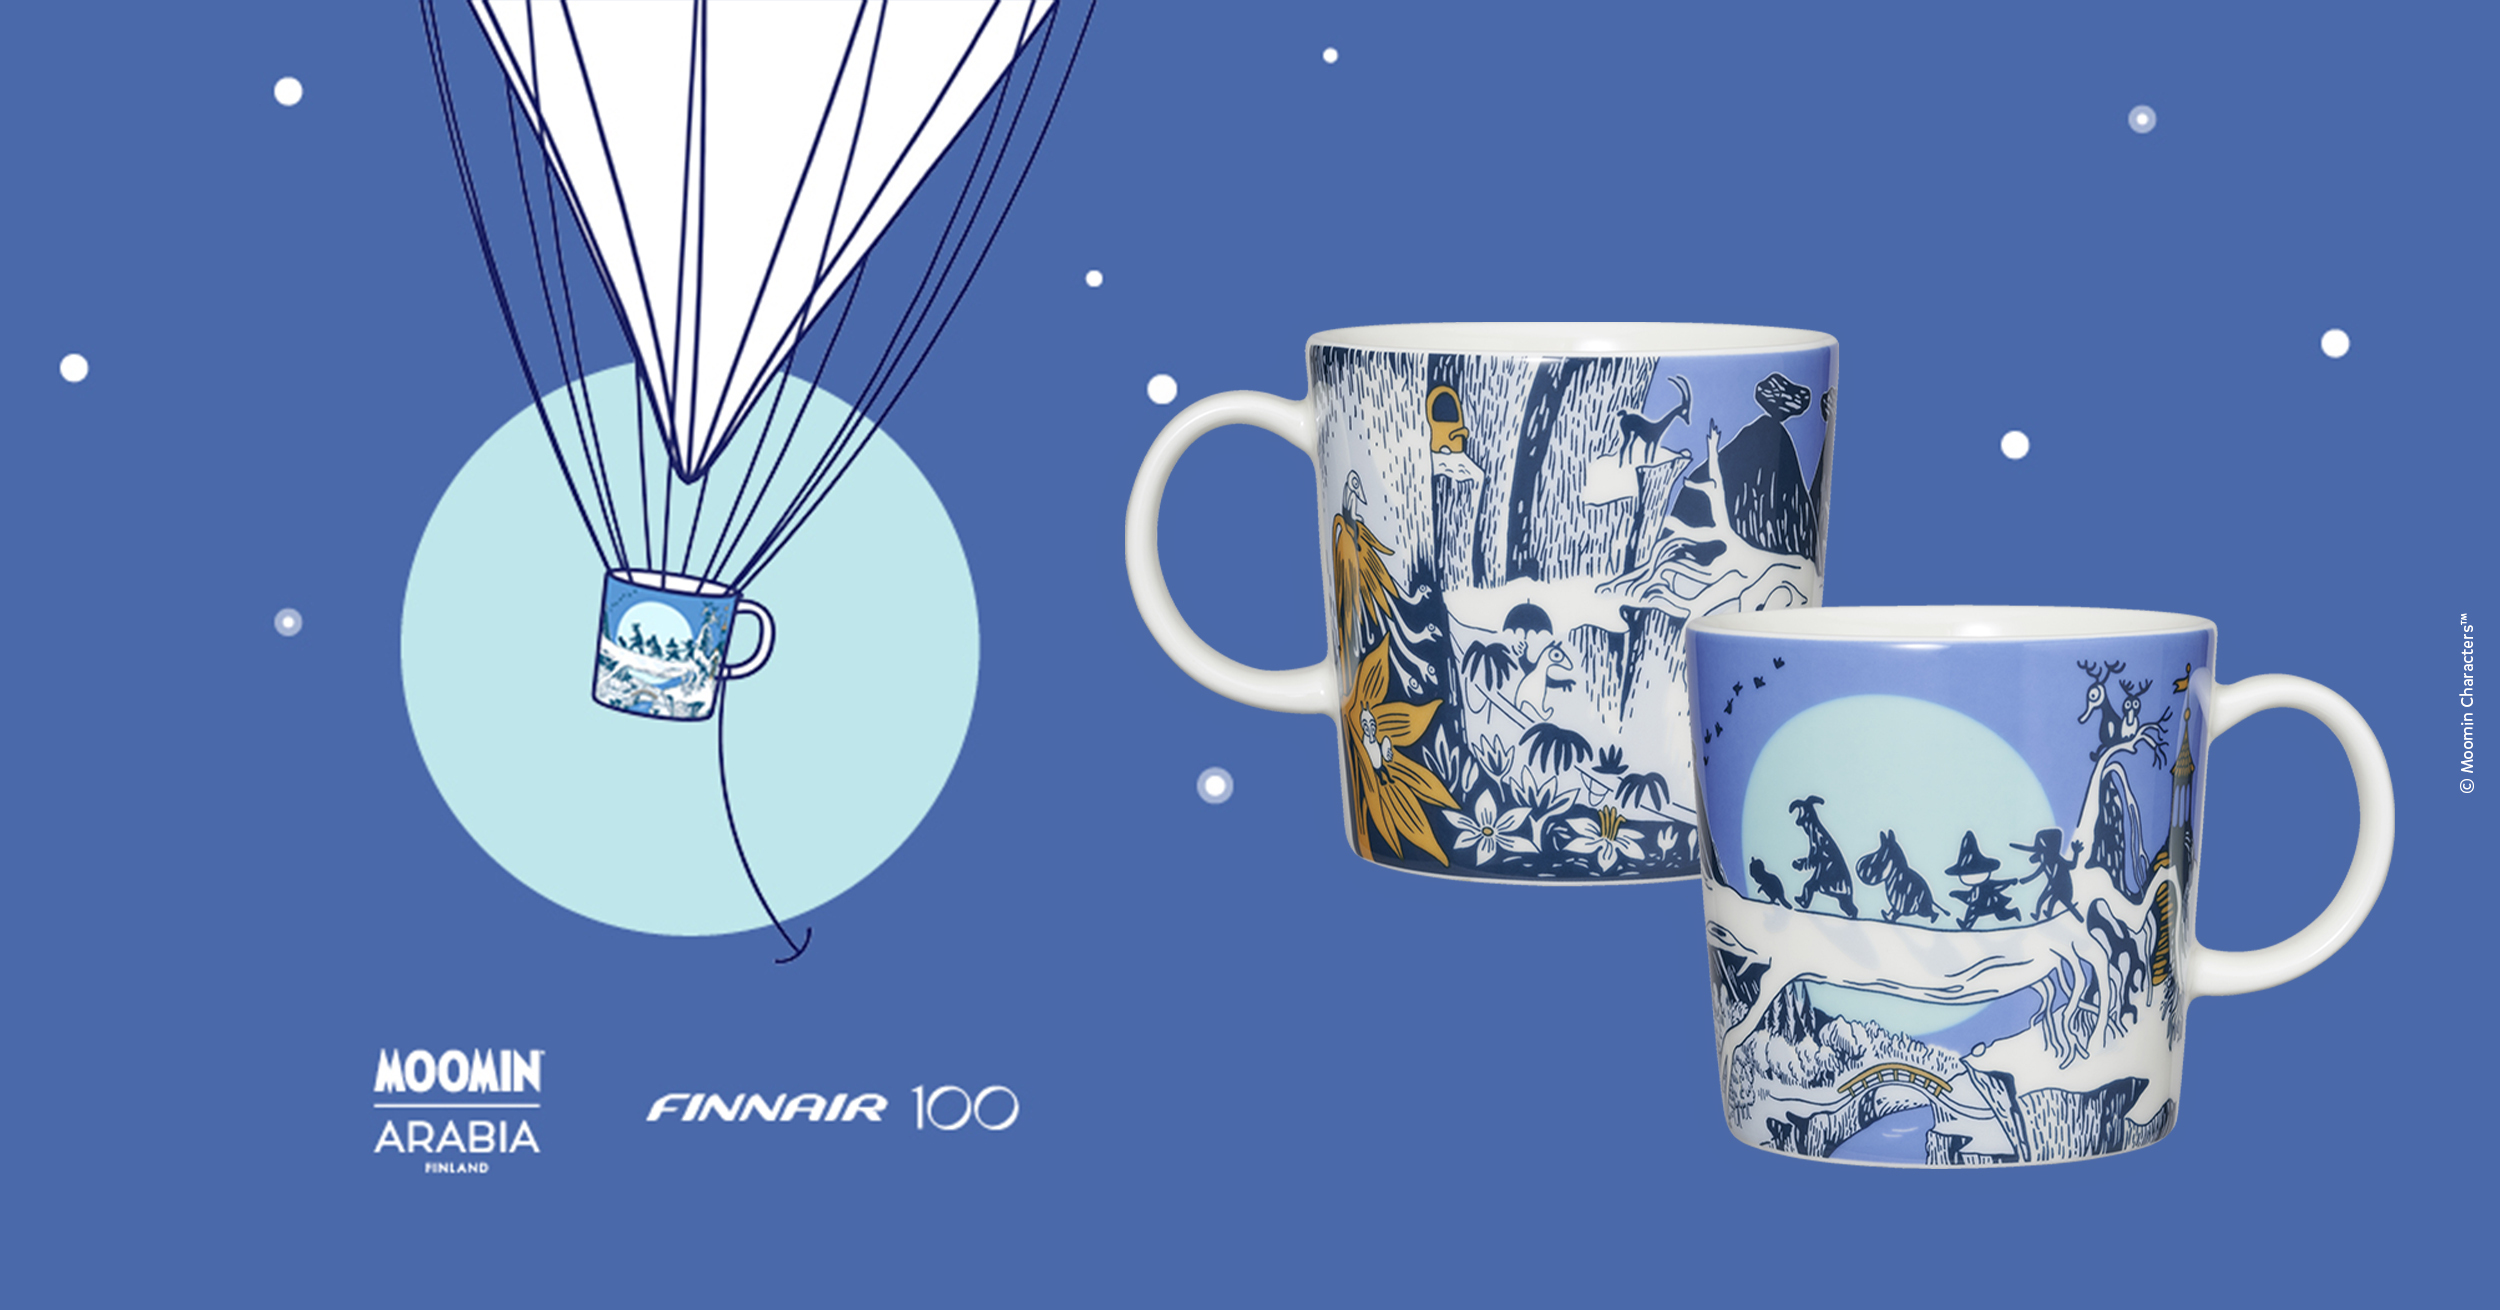 New Journey mug celebrates Finnair's 100th anniversary - Moomin